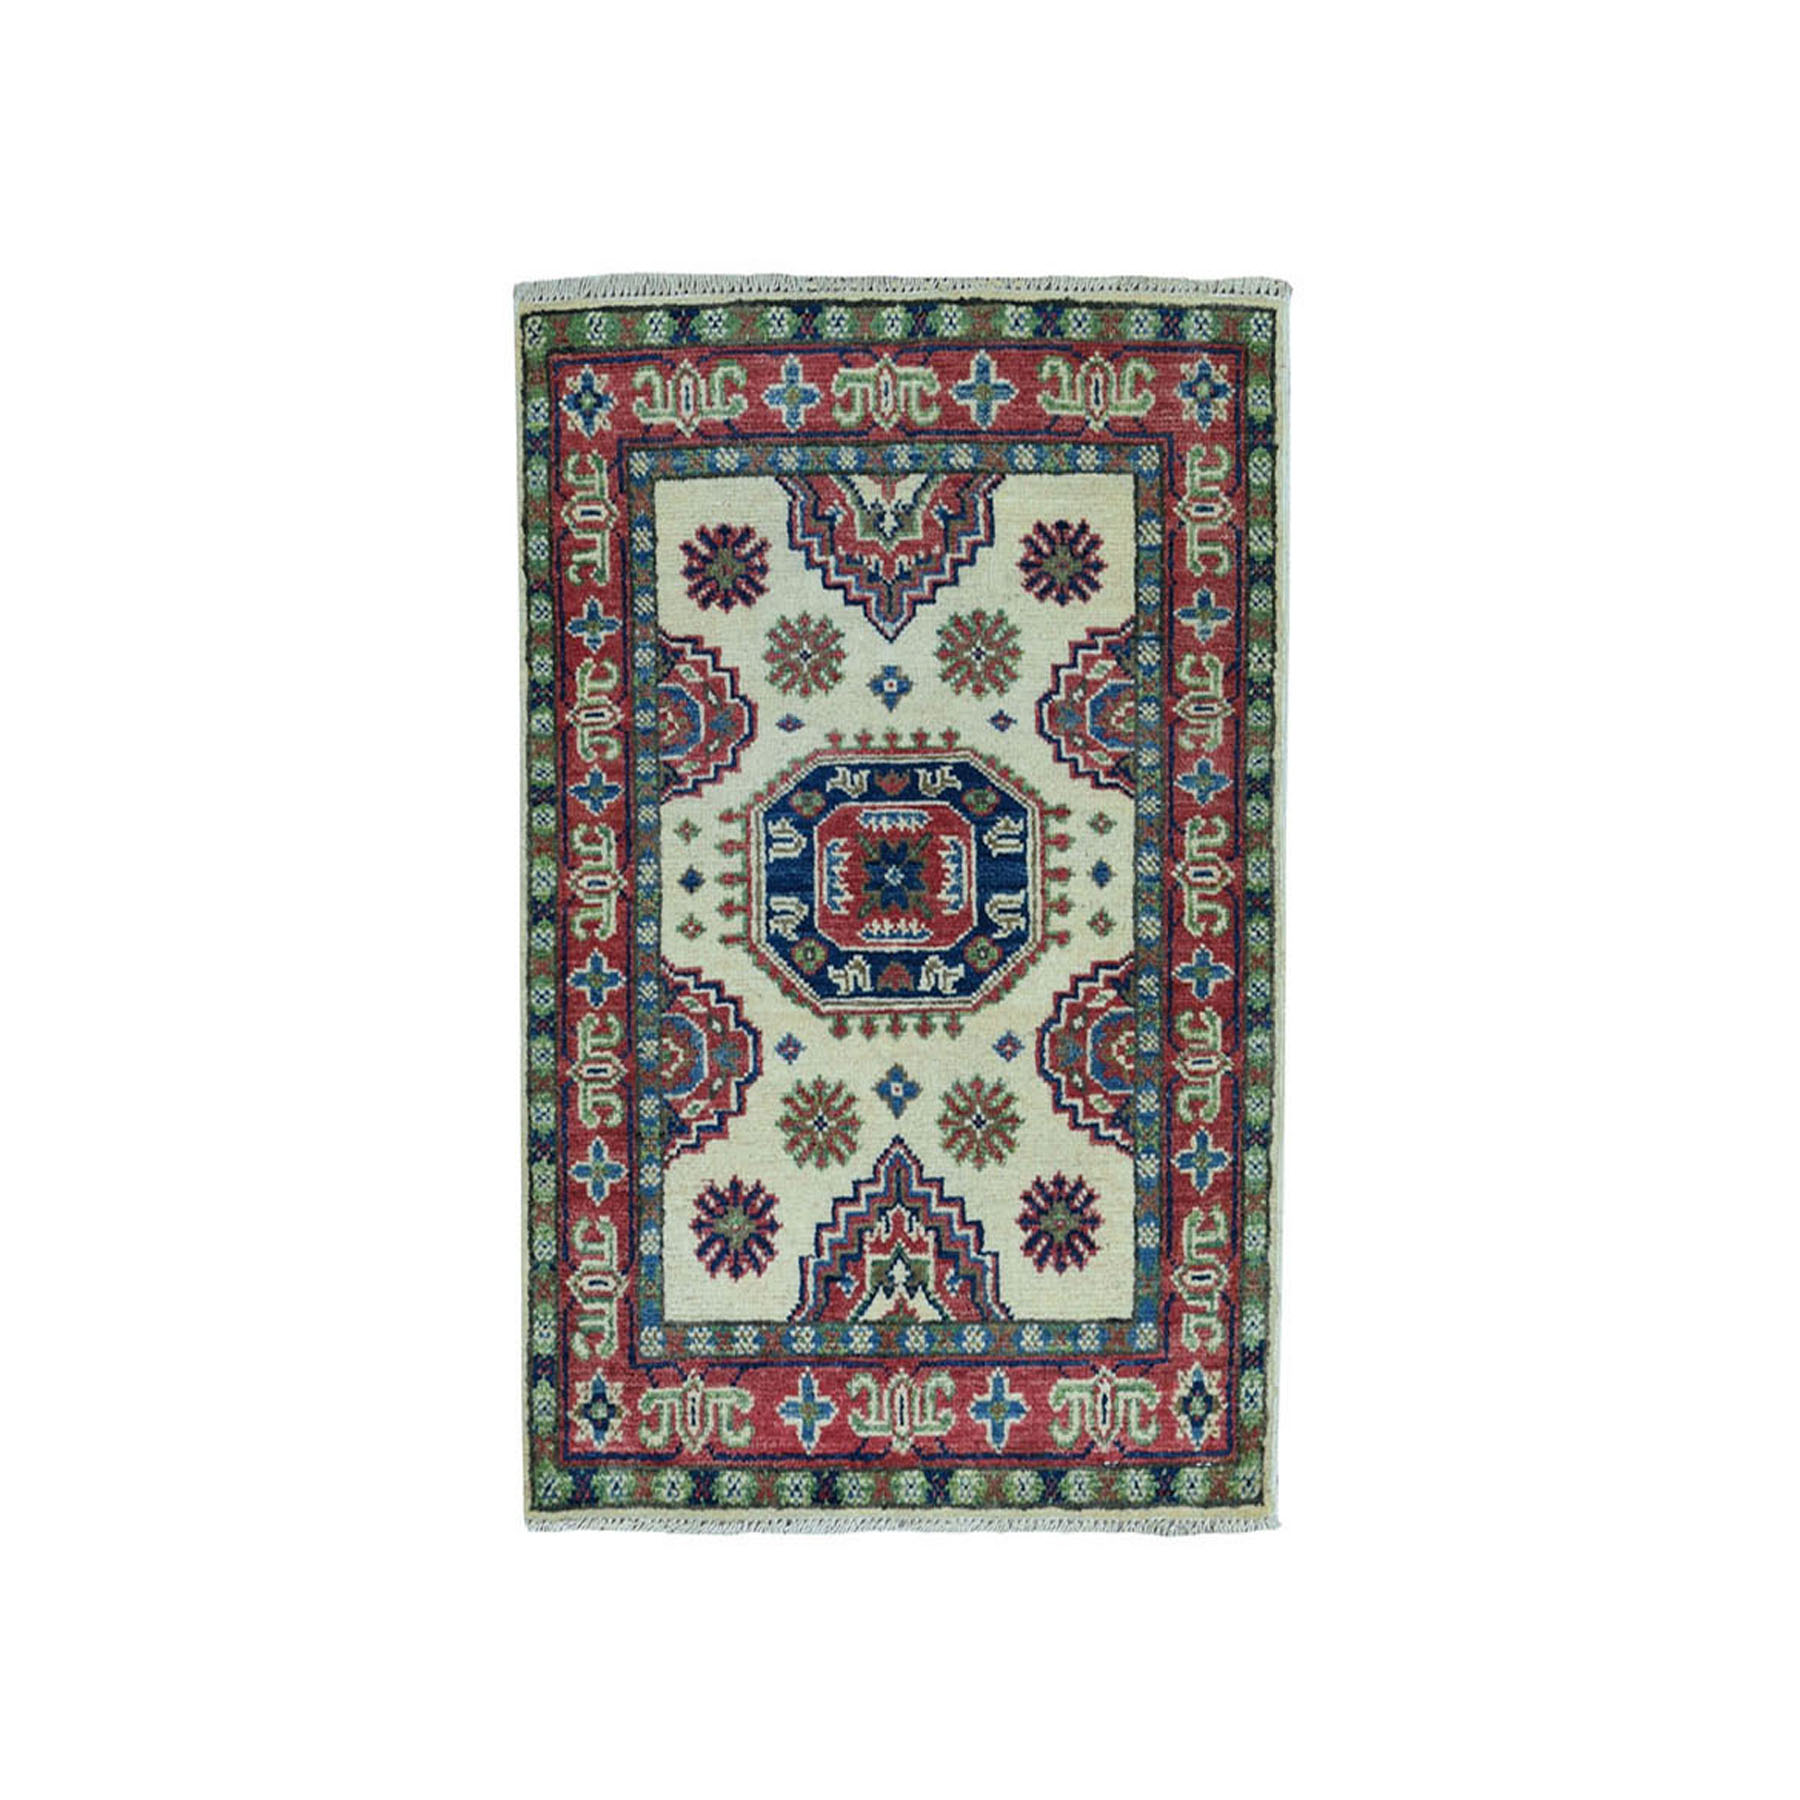 2'x2'10" Ivory Geometric Design Kazak Pure Wool Hand Woven Oriental Rug 